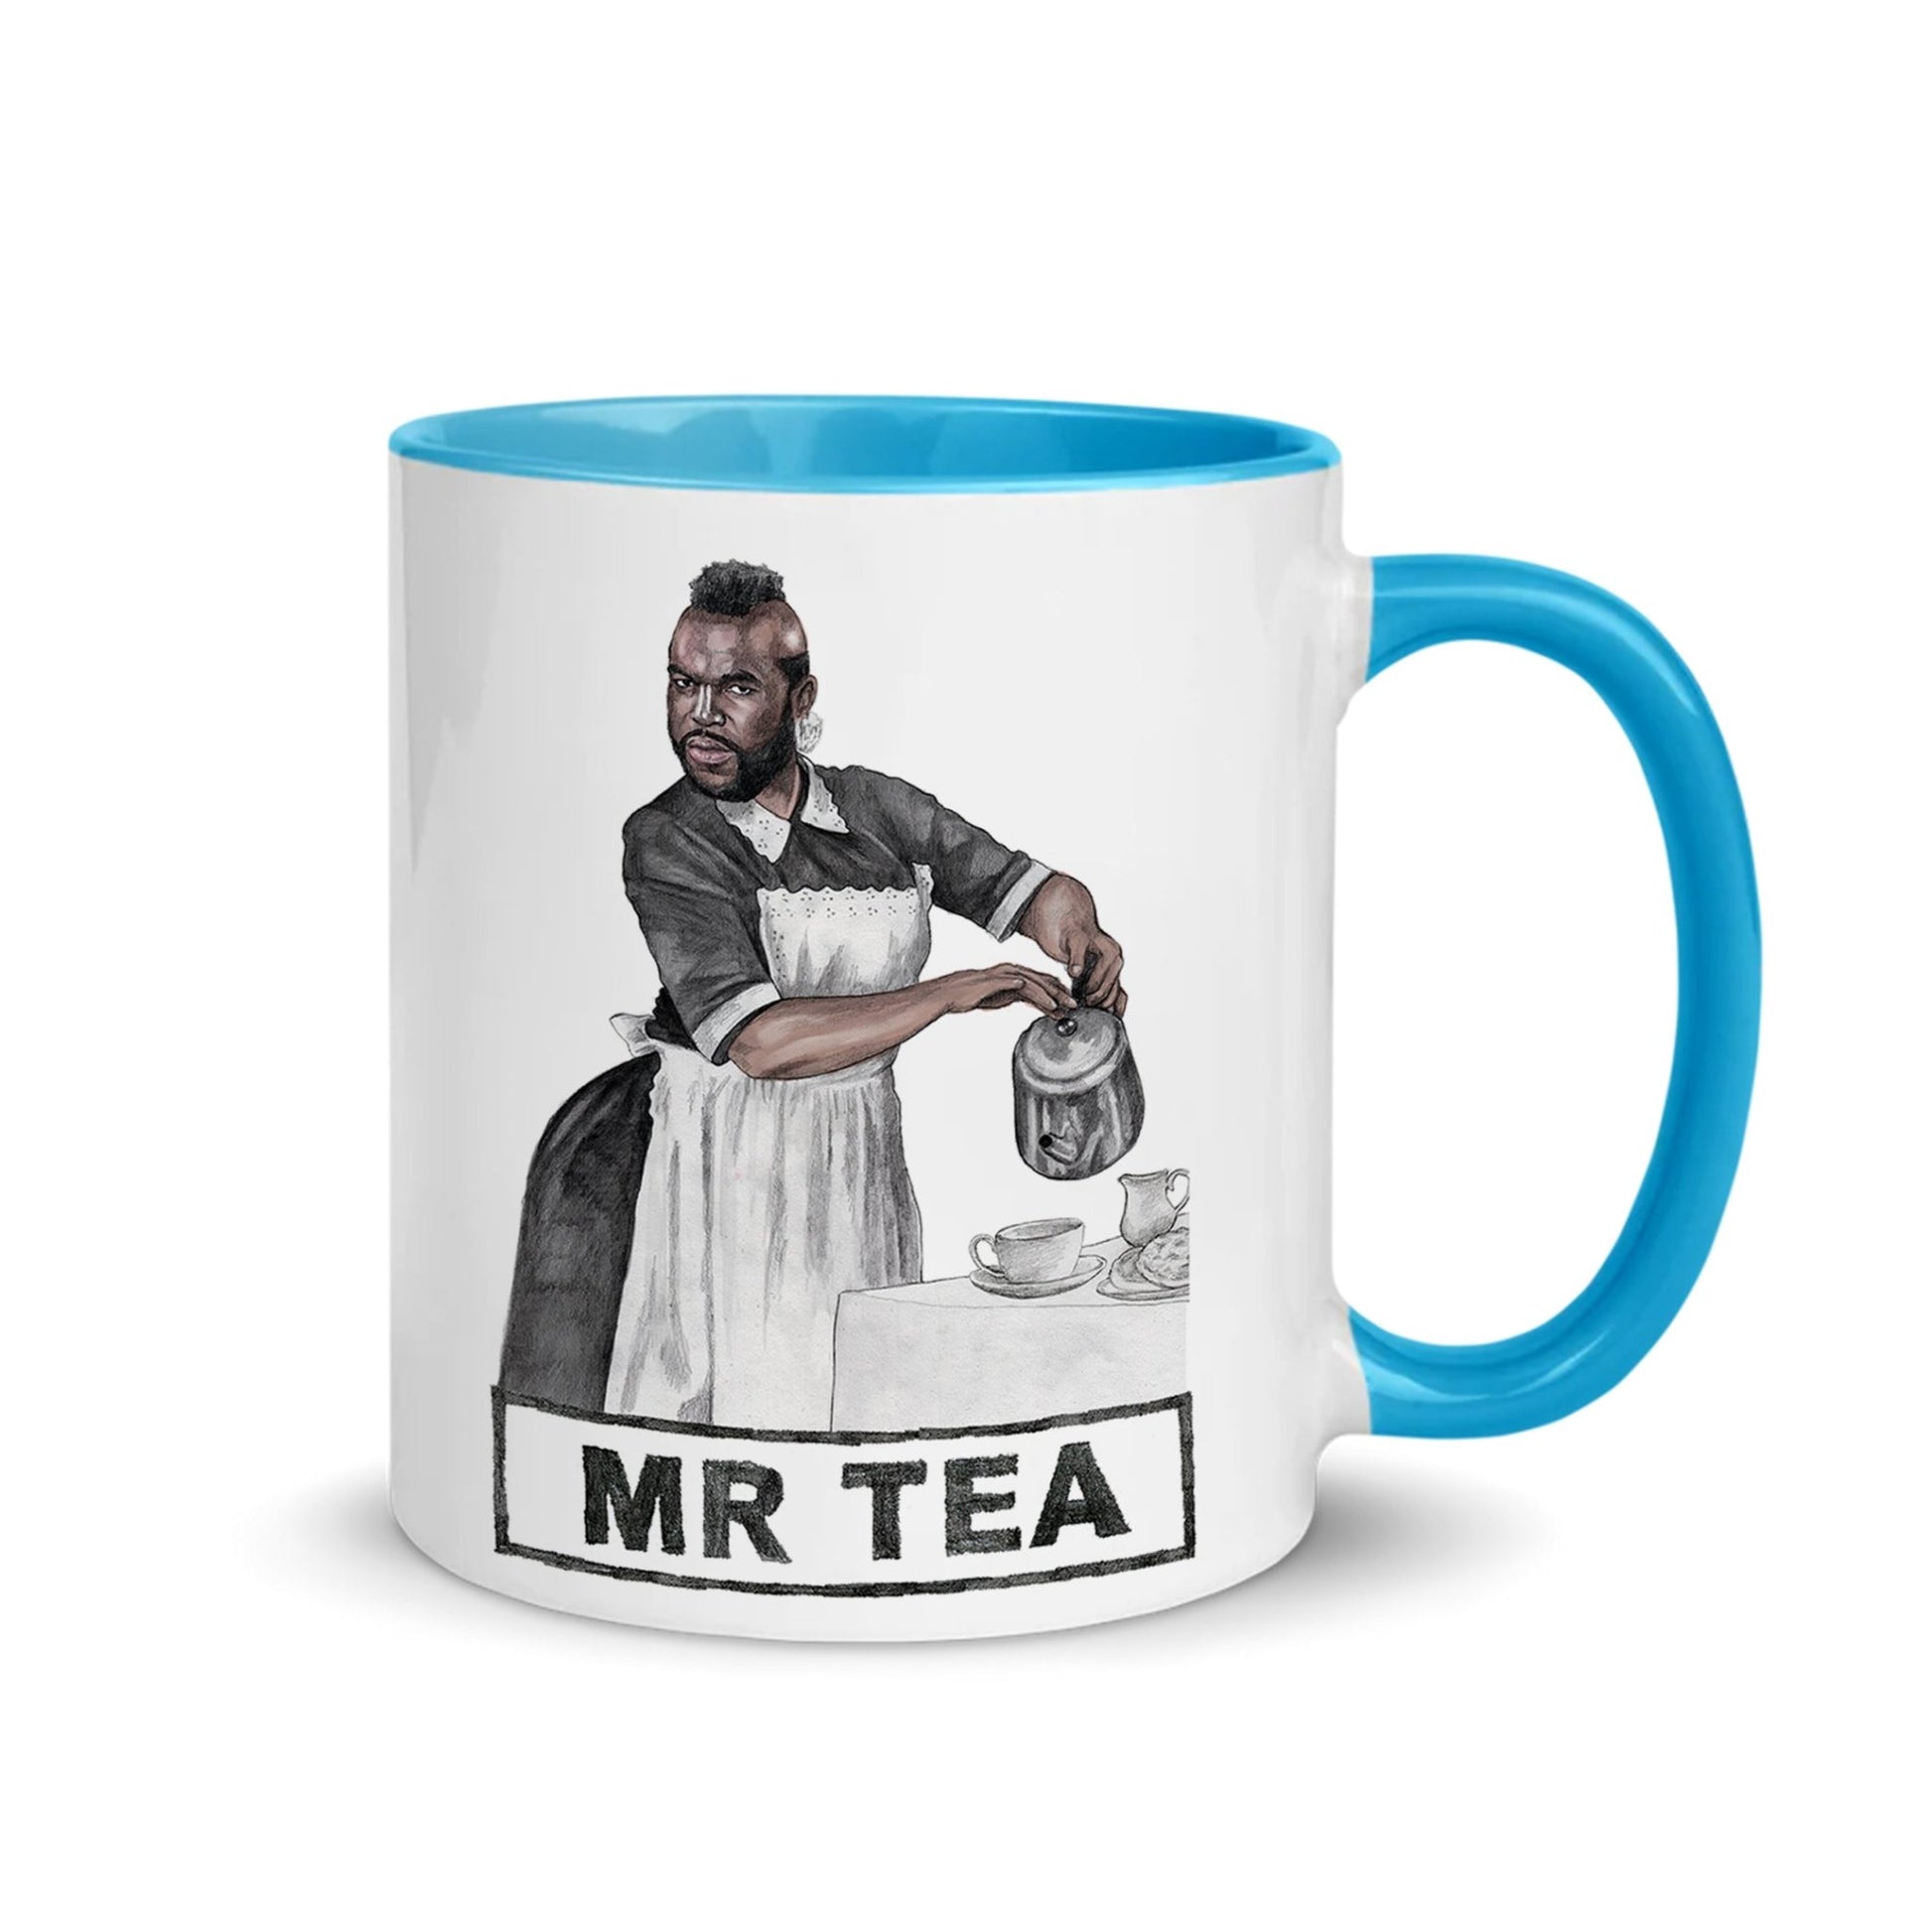 Mr Tea Ceramic Mug - Quite Good Cards Funny Birthday Card